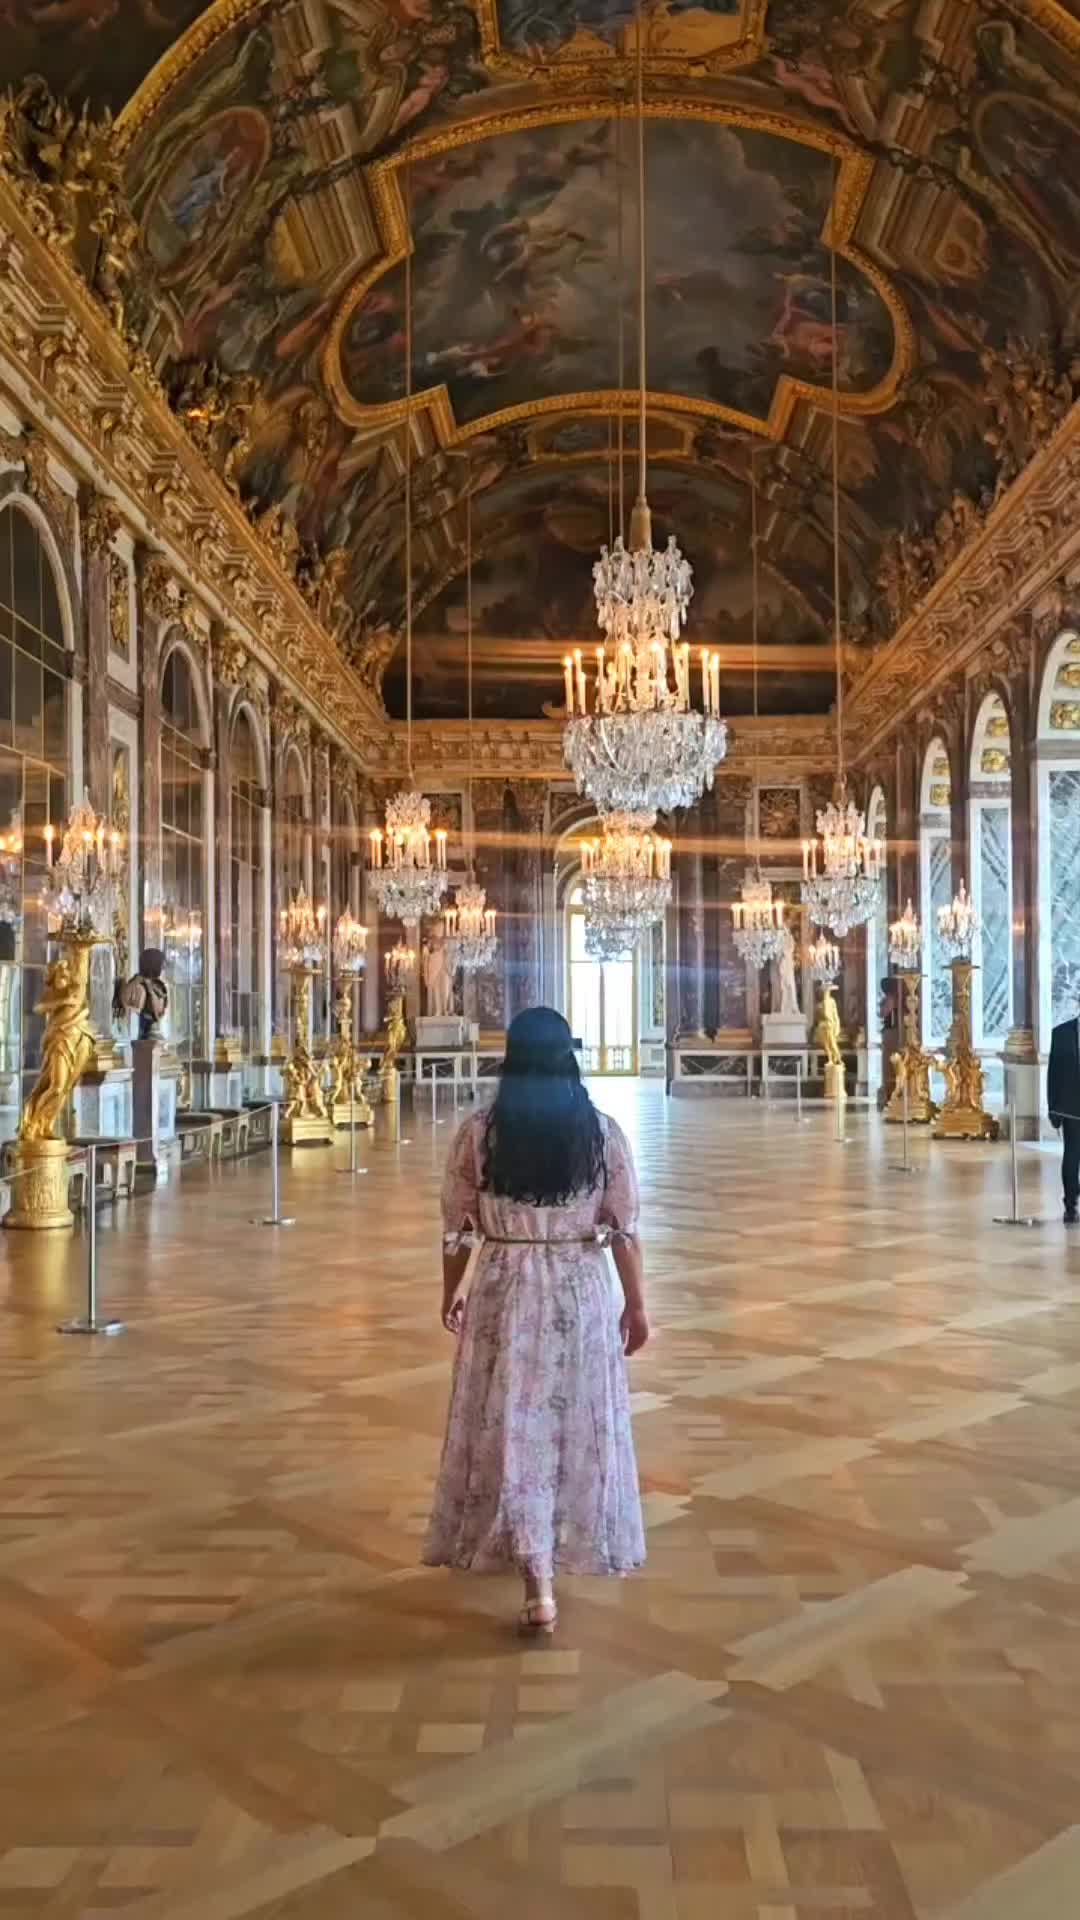 Explore Versailles: A Glimpse of Royal Grandeur